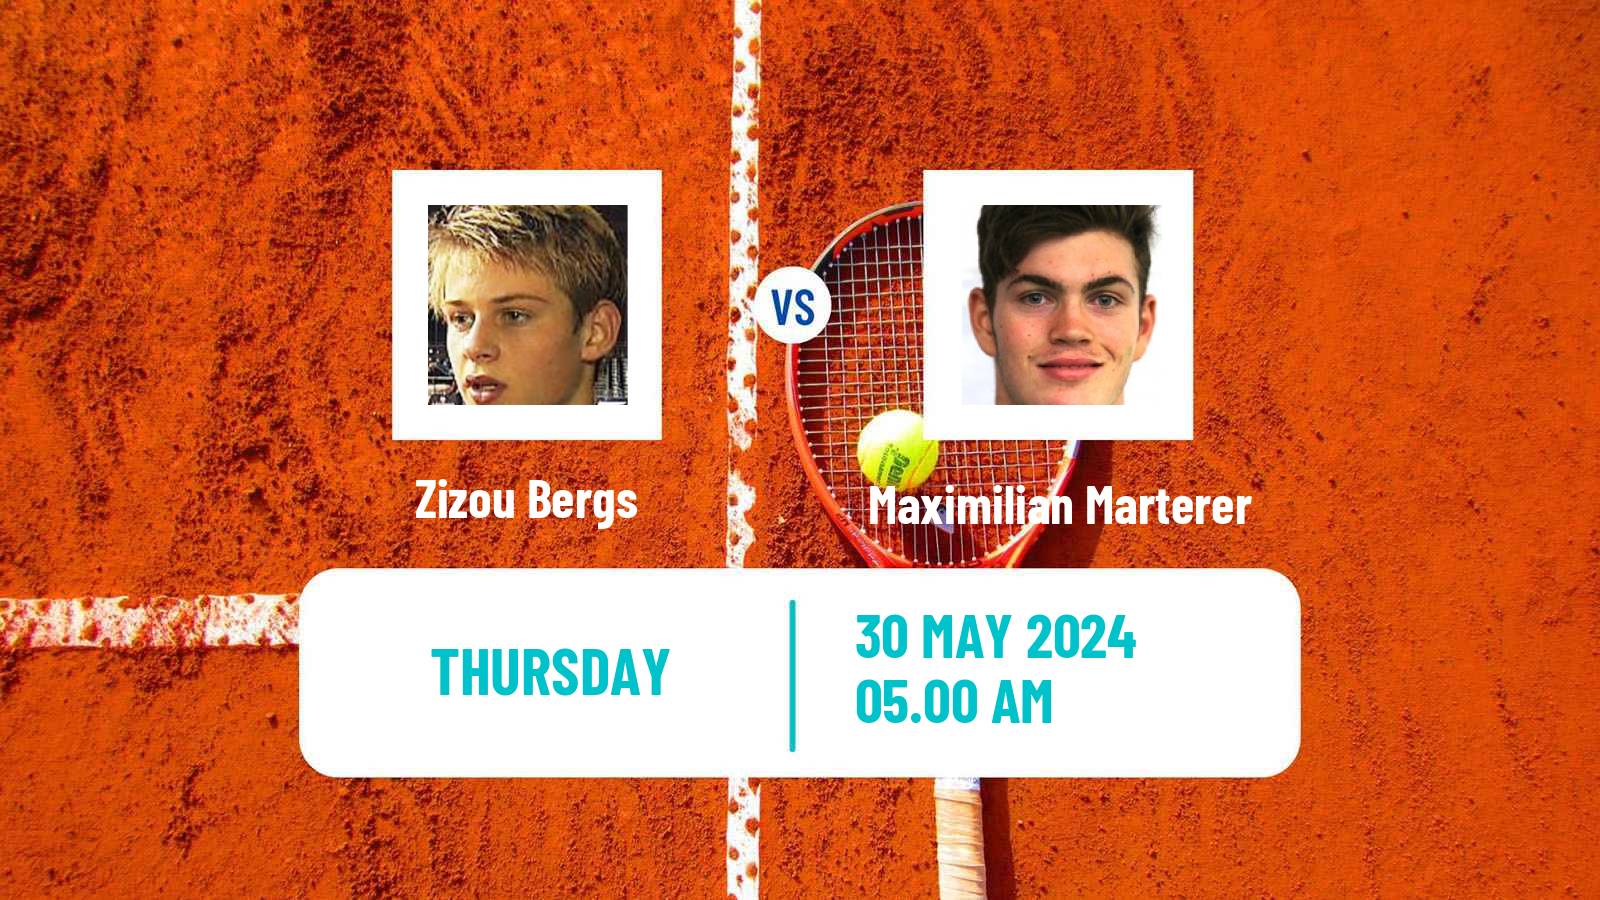 Tennis ATP Roland Garros Zizou Bergs - Maximilian Marterer